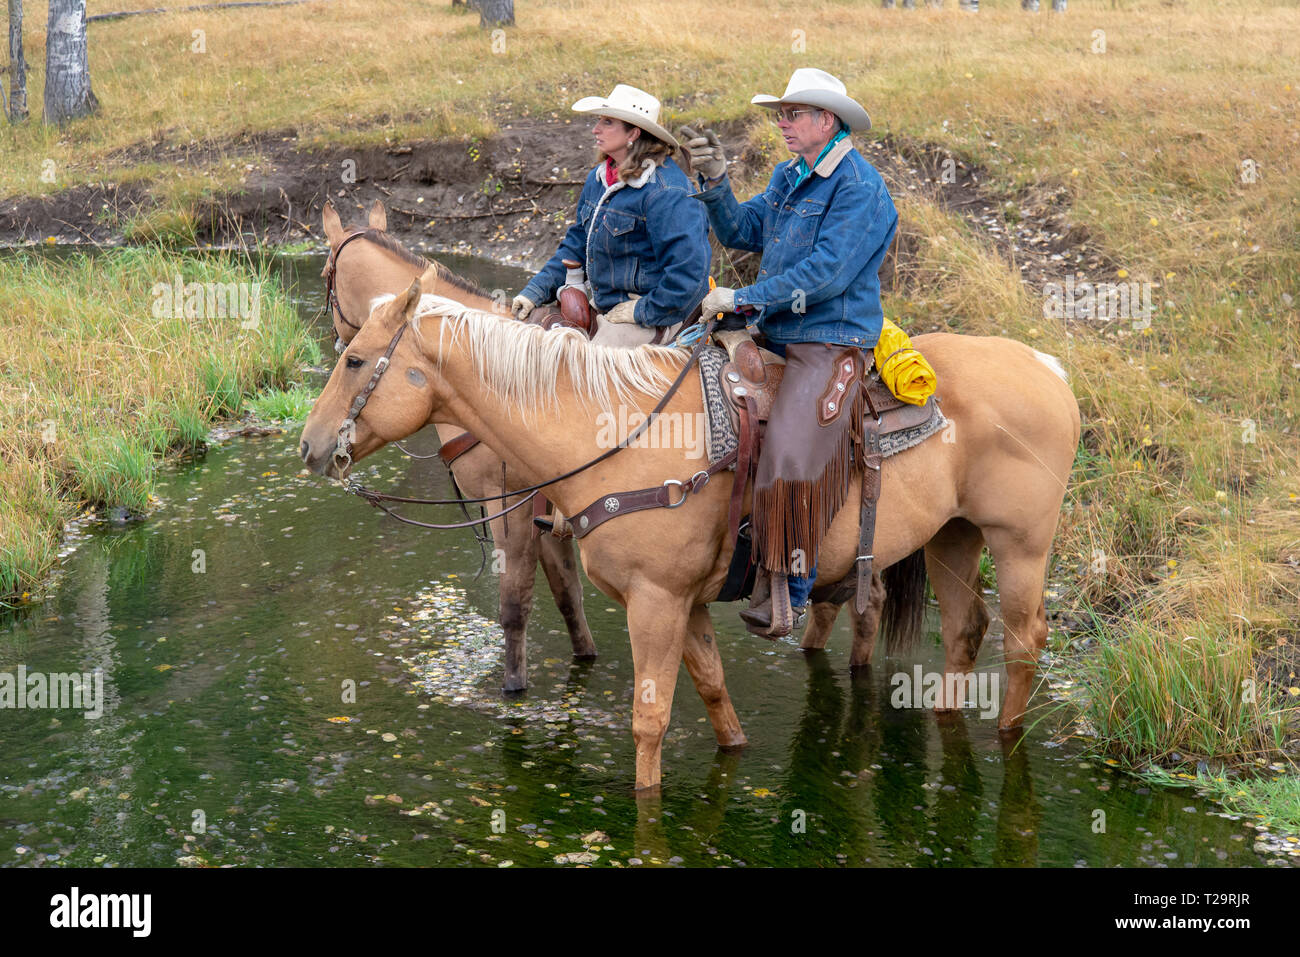 Cowboys of Wyoming, USA Stock Photo